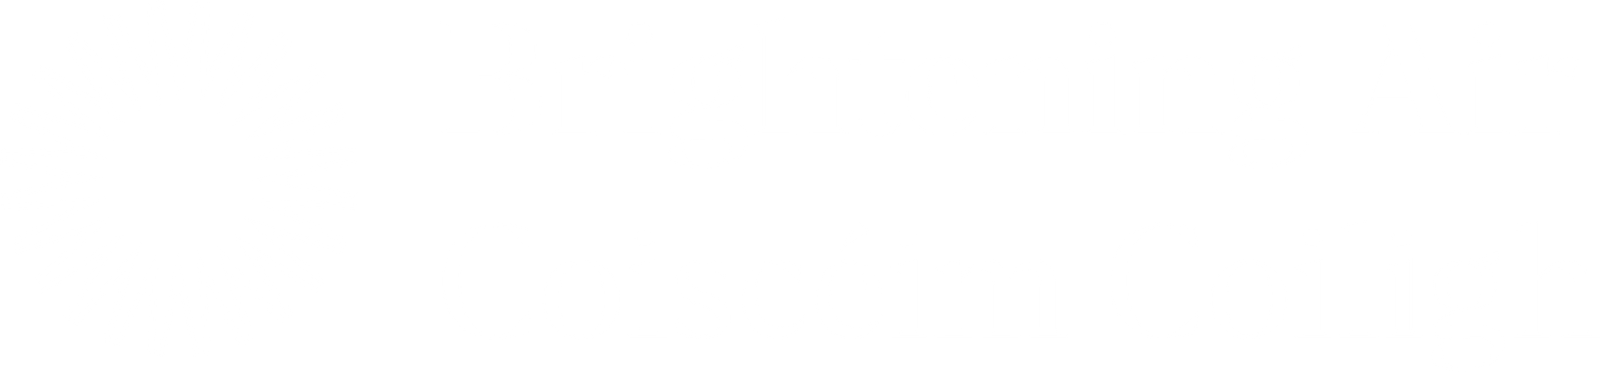 Brightening Air Logo